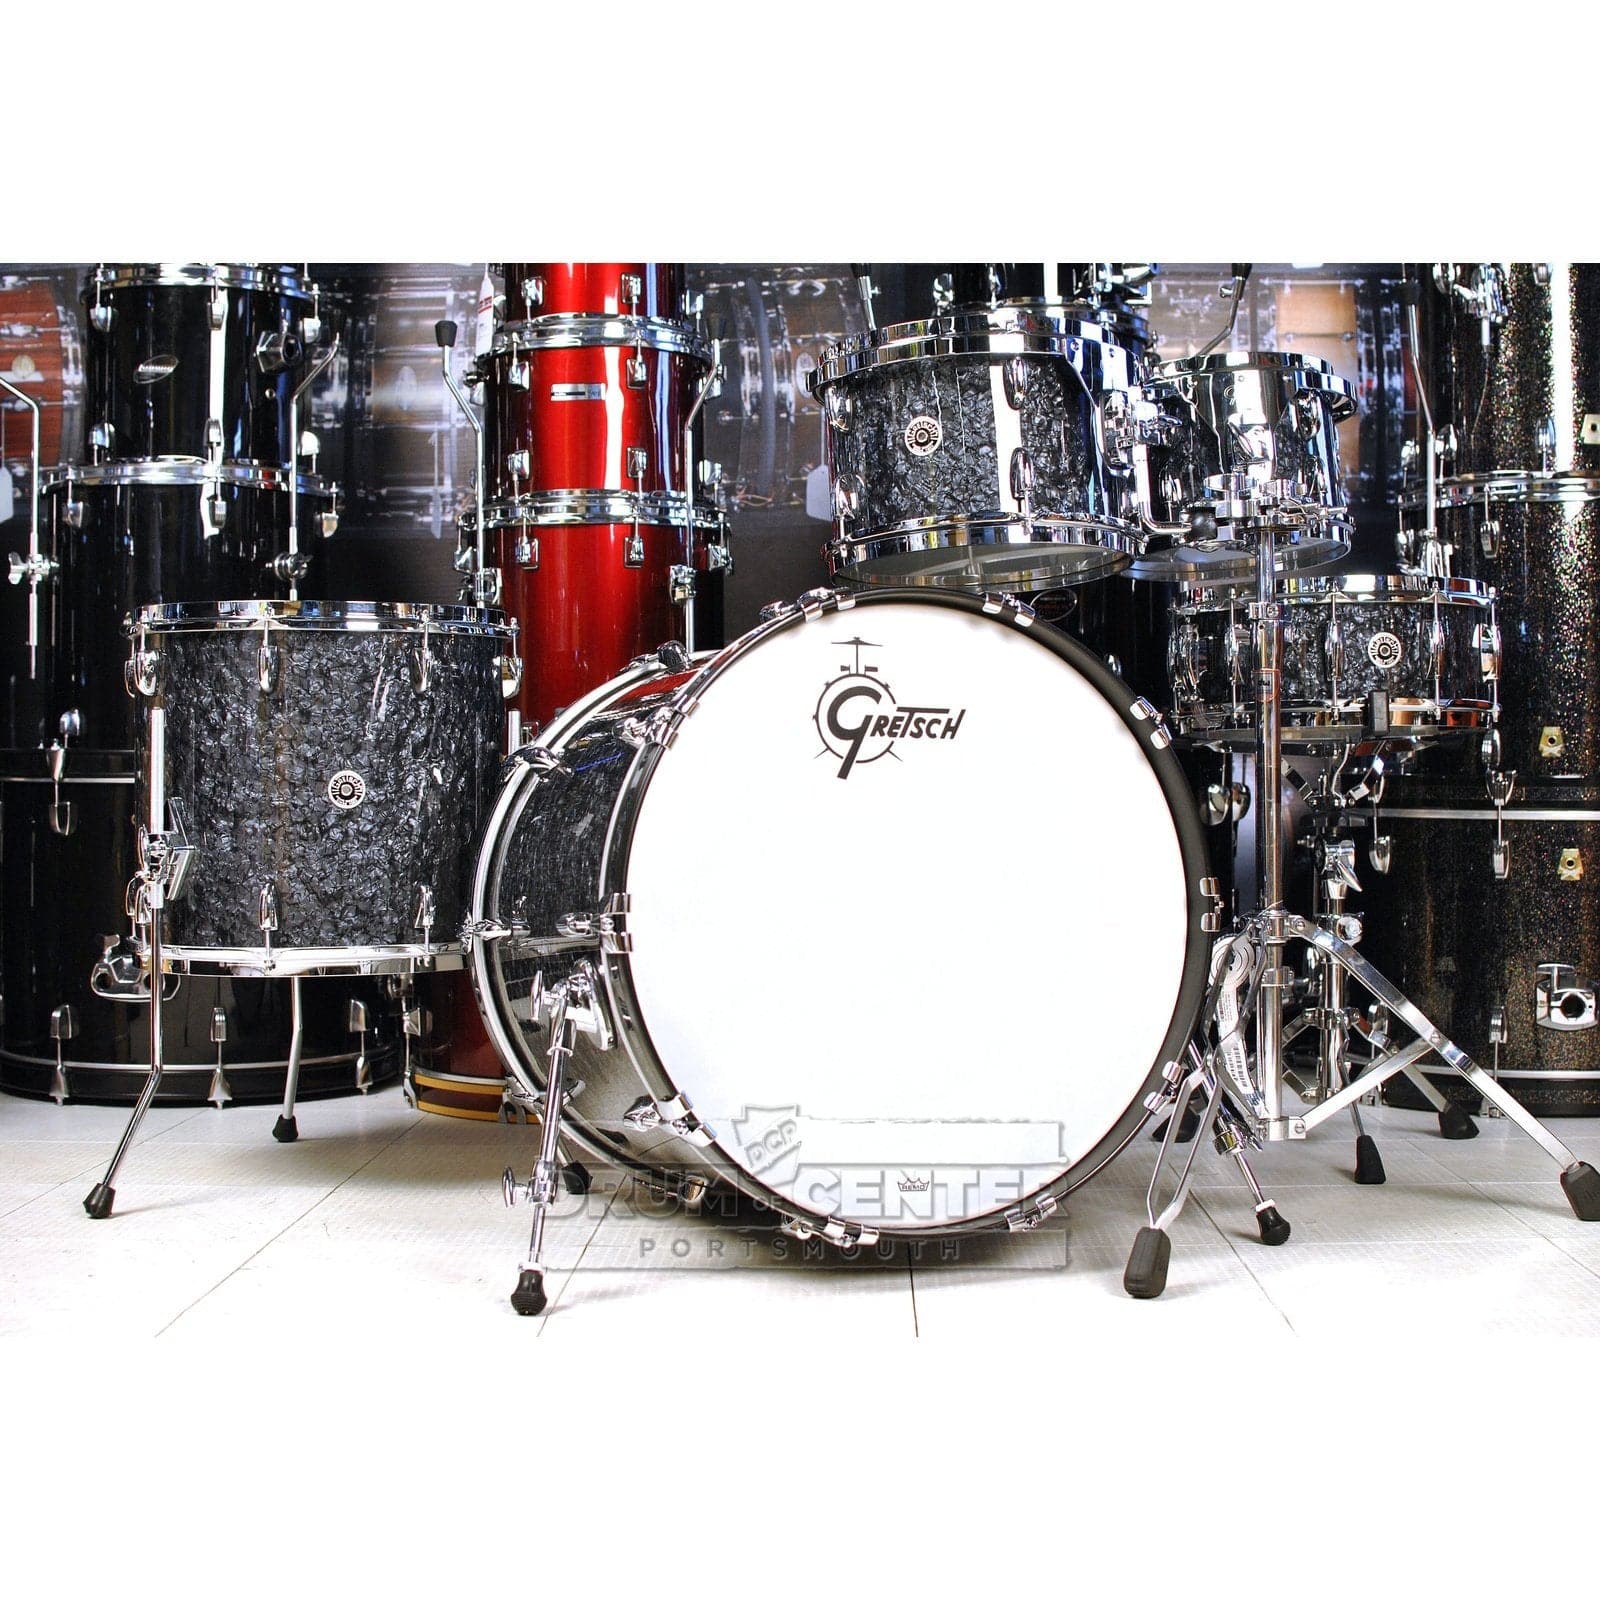 Gretsch Drums Brooklyn Micro Kit Demo 